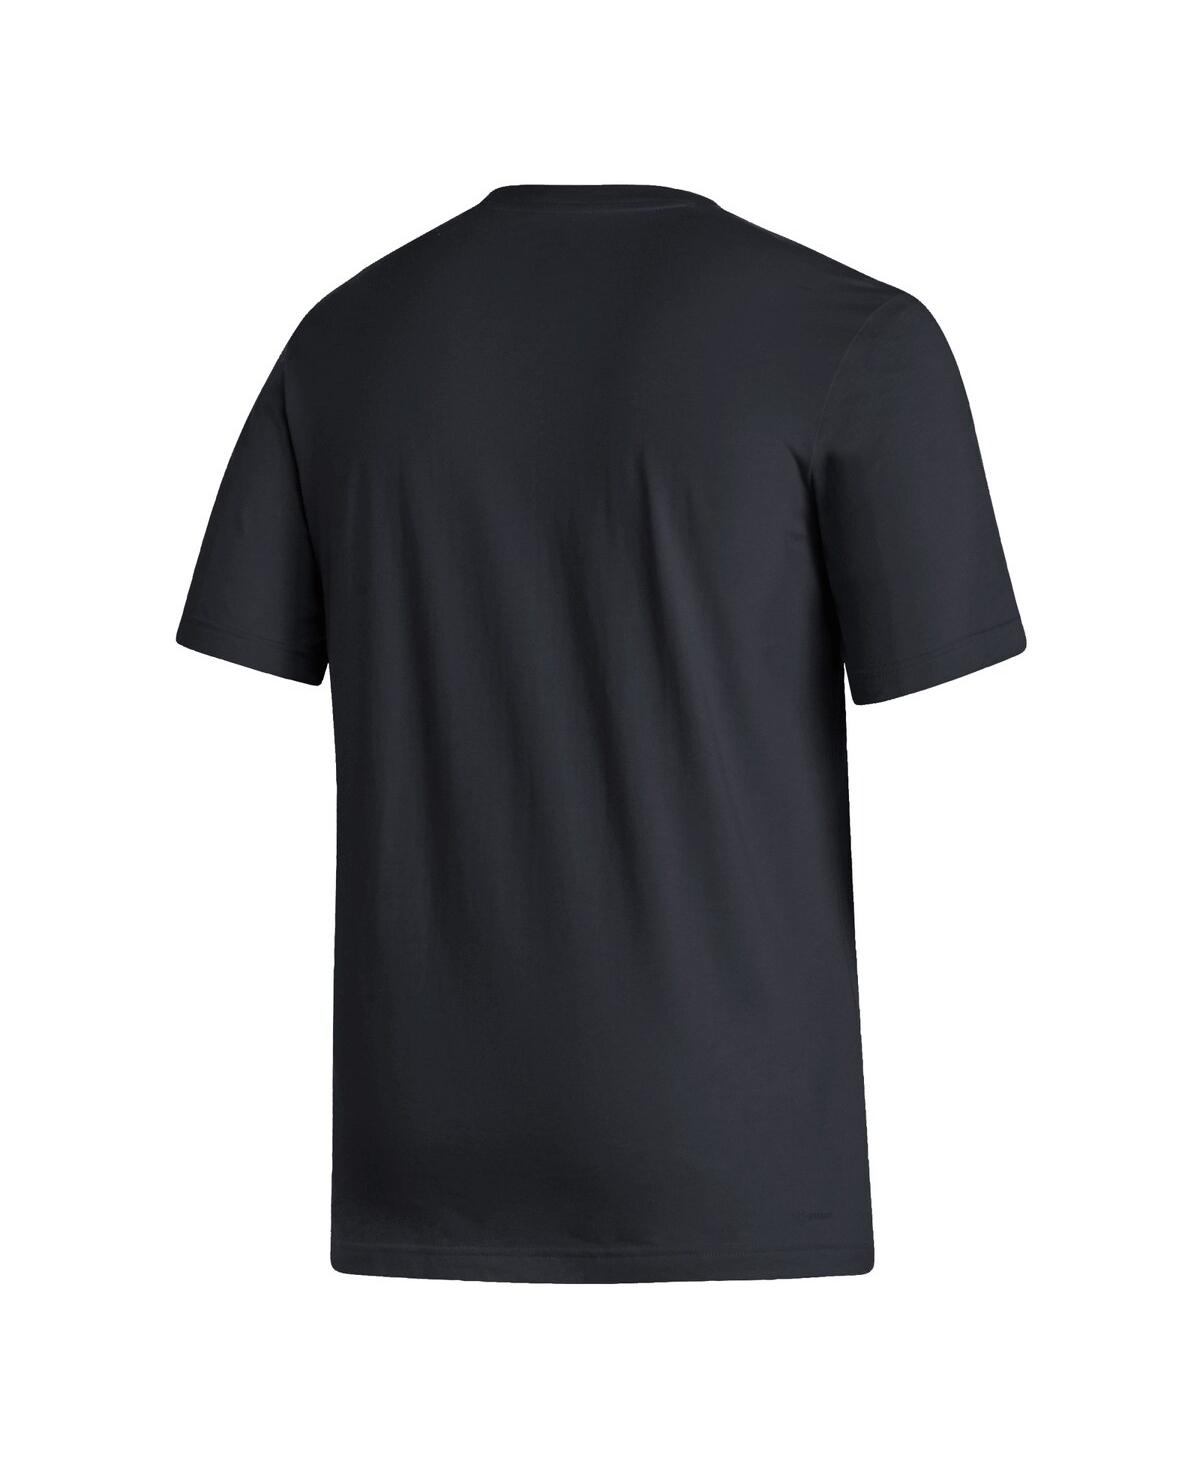 Shop Adidas Originals Men's Adidas Black Louisville Cardinals Locker Lines Softball Fresh T-shirt